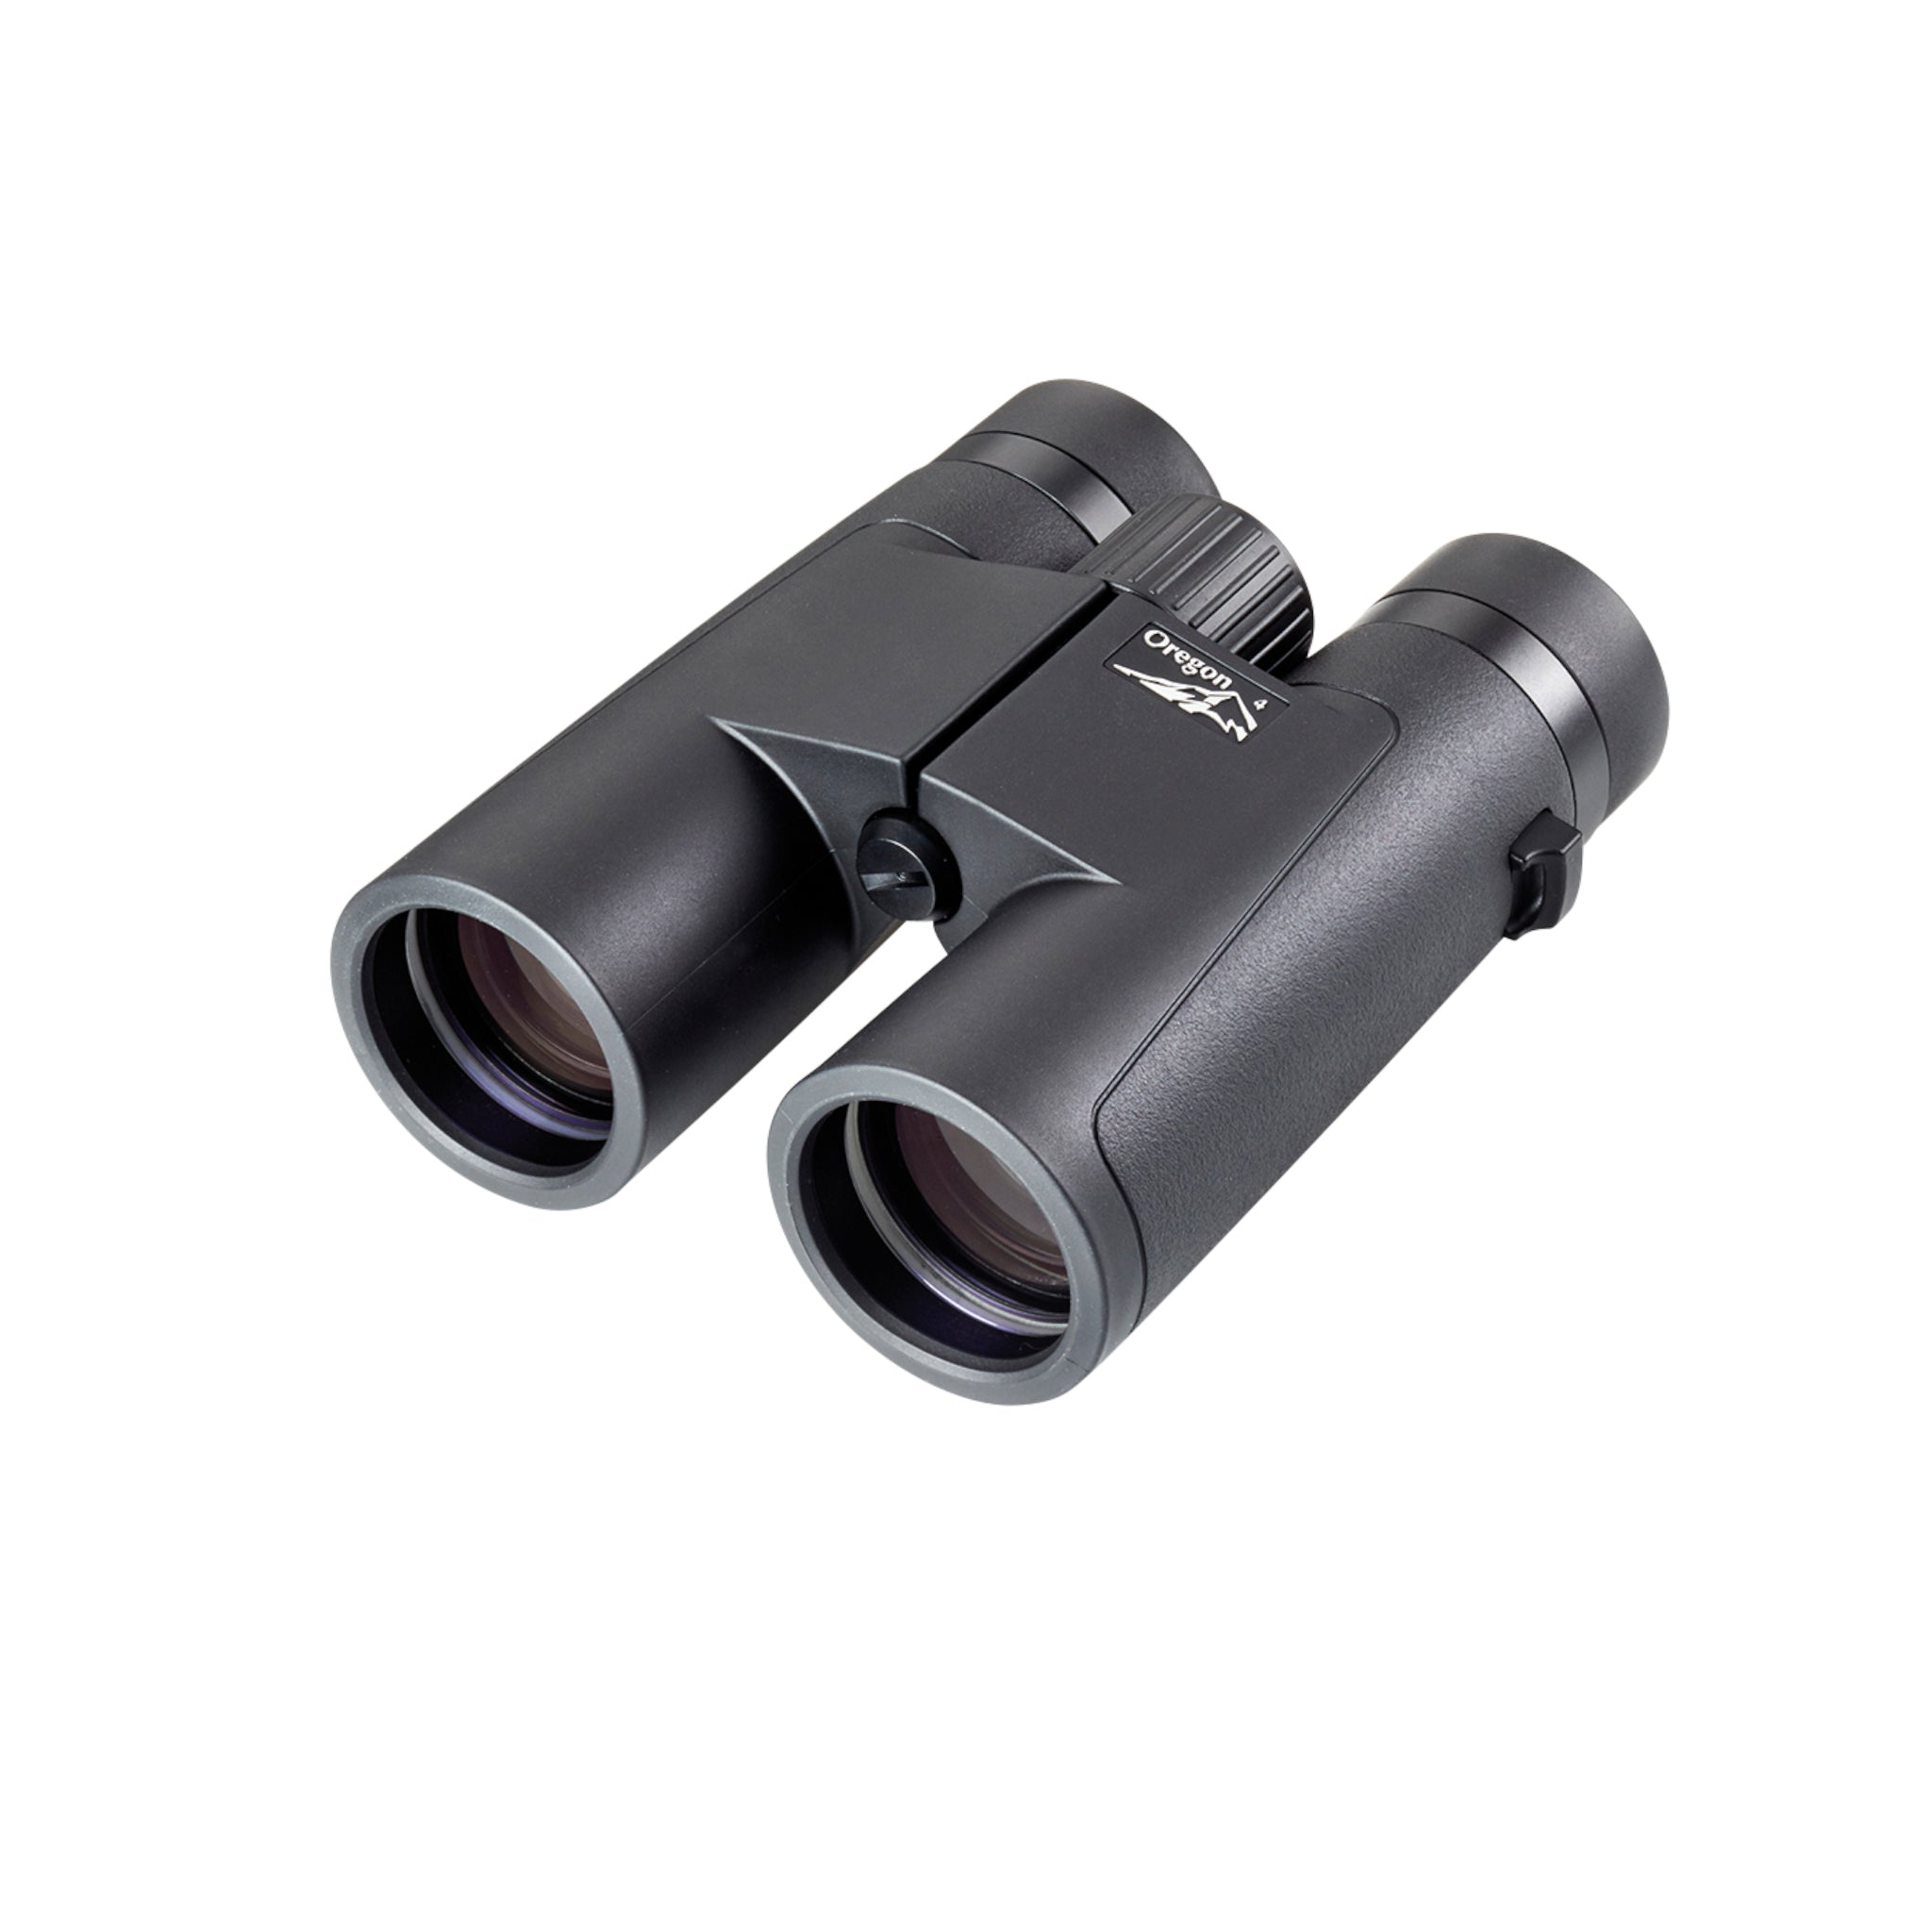 Opticron Oregon 4 Pc Oasis 10x42 Binoculars (Black)